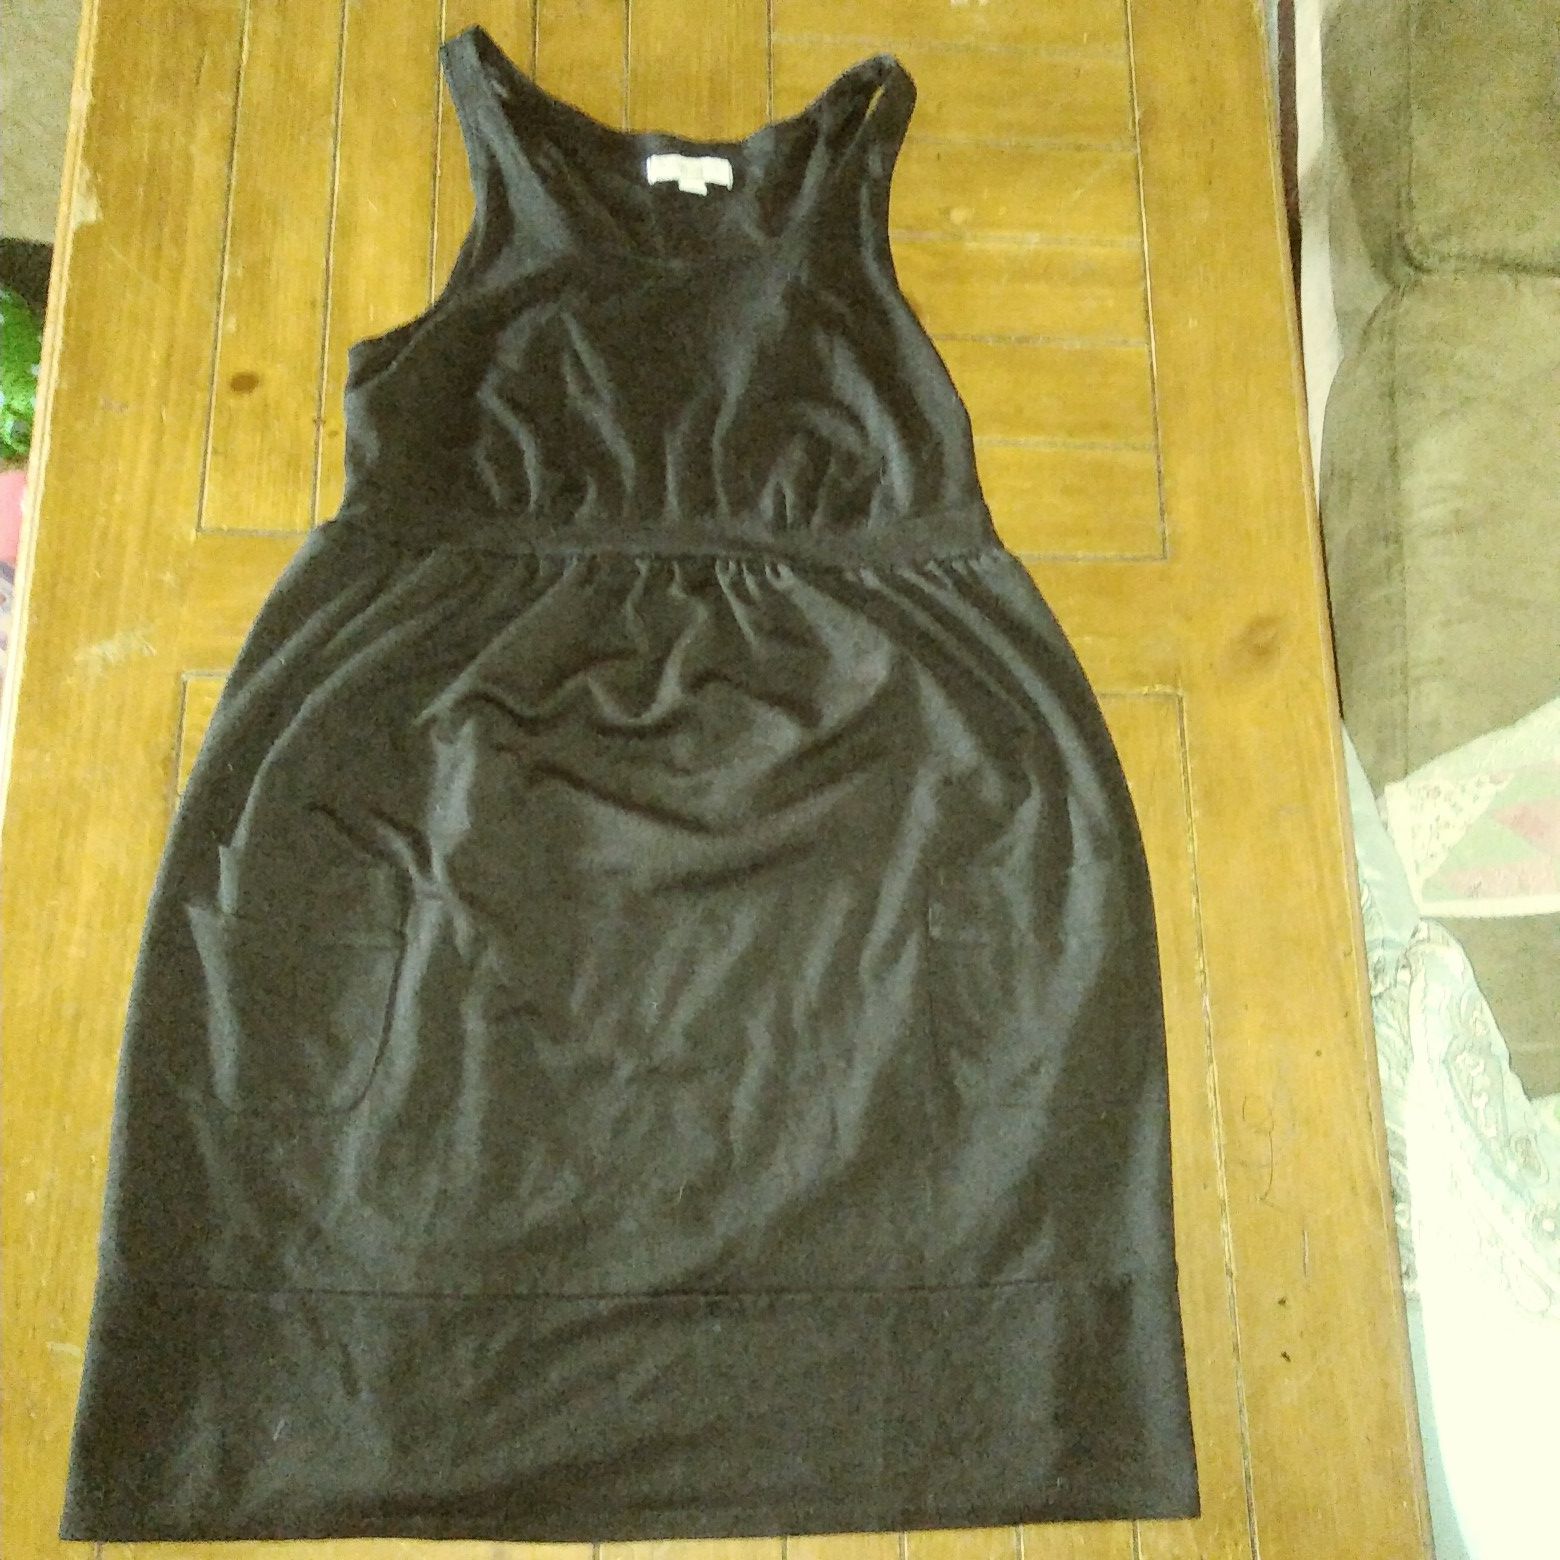 Size medium maternity dress